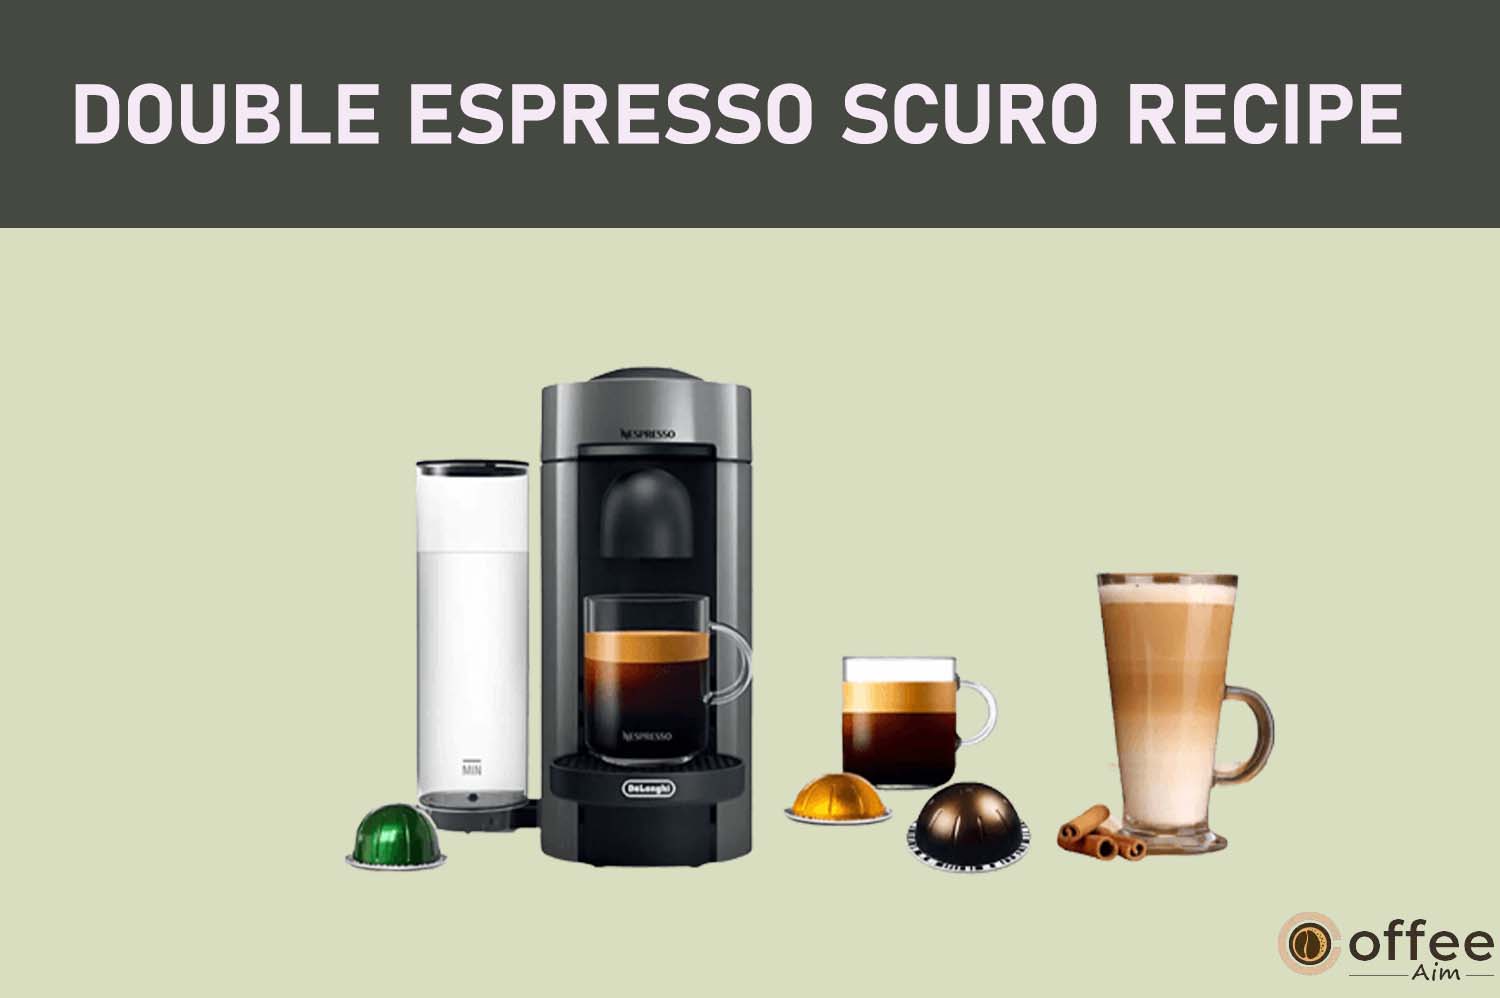 Featured image for the article "Double Espresso Scuro Recipe"